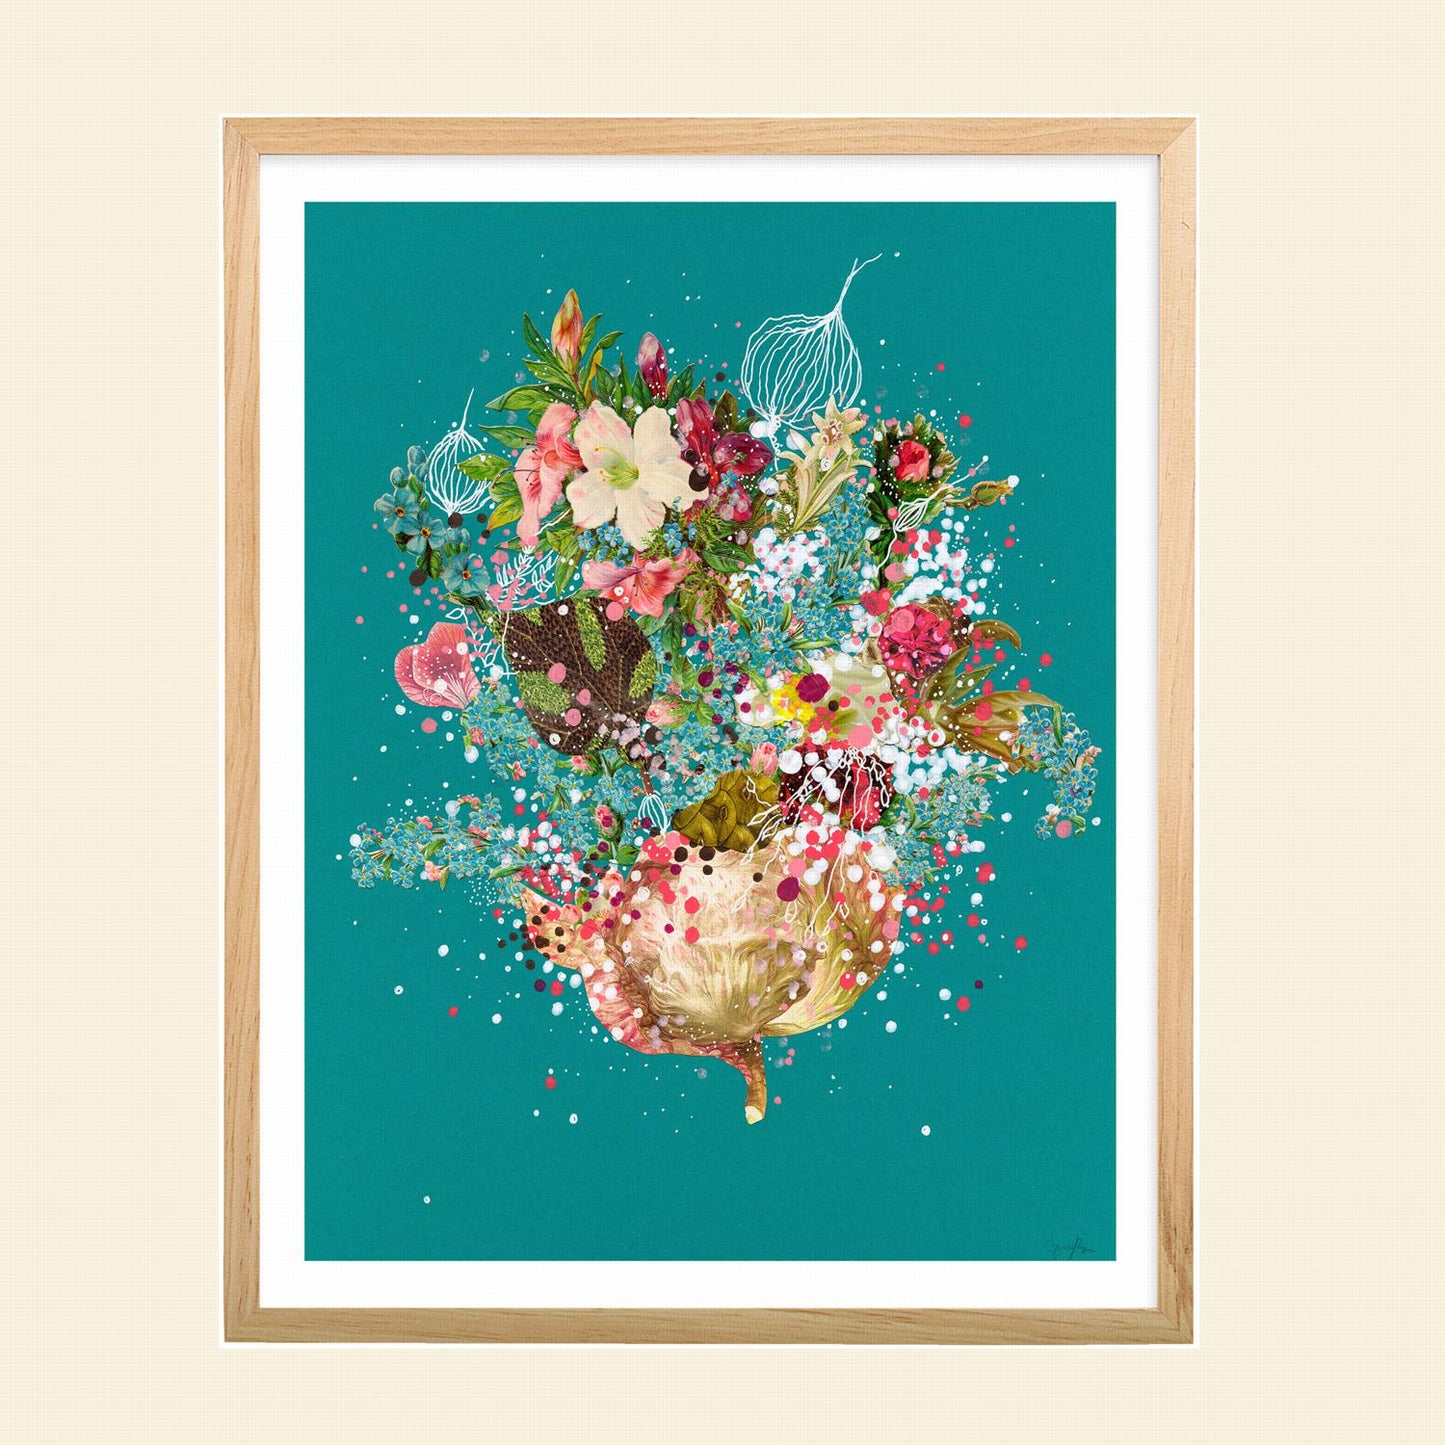 Jenny Brown - "Flowering Sea Lattice"